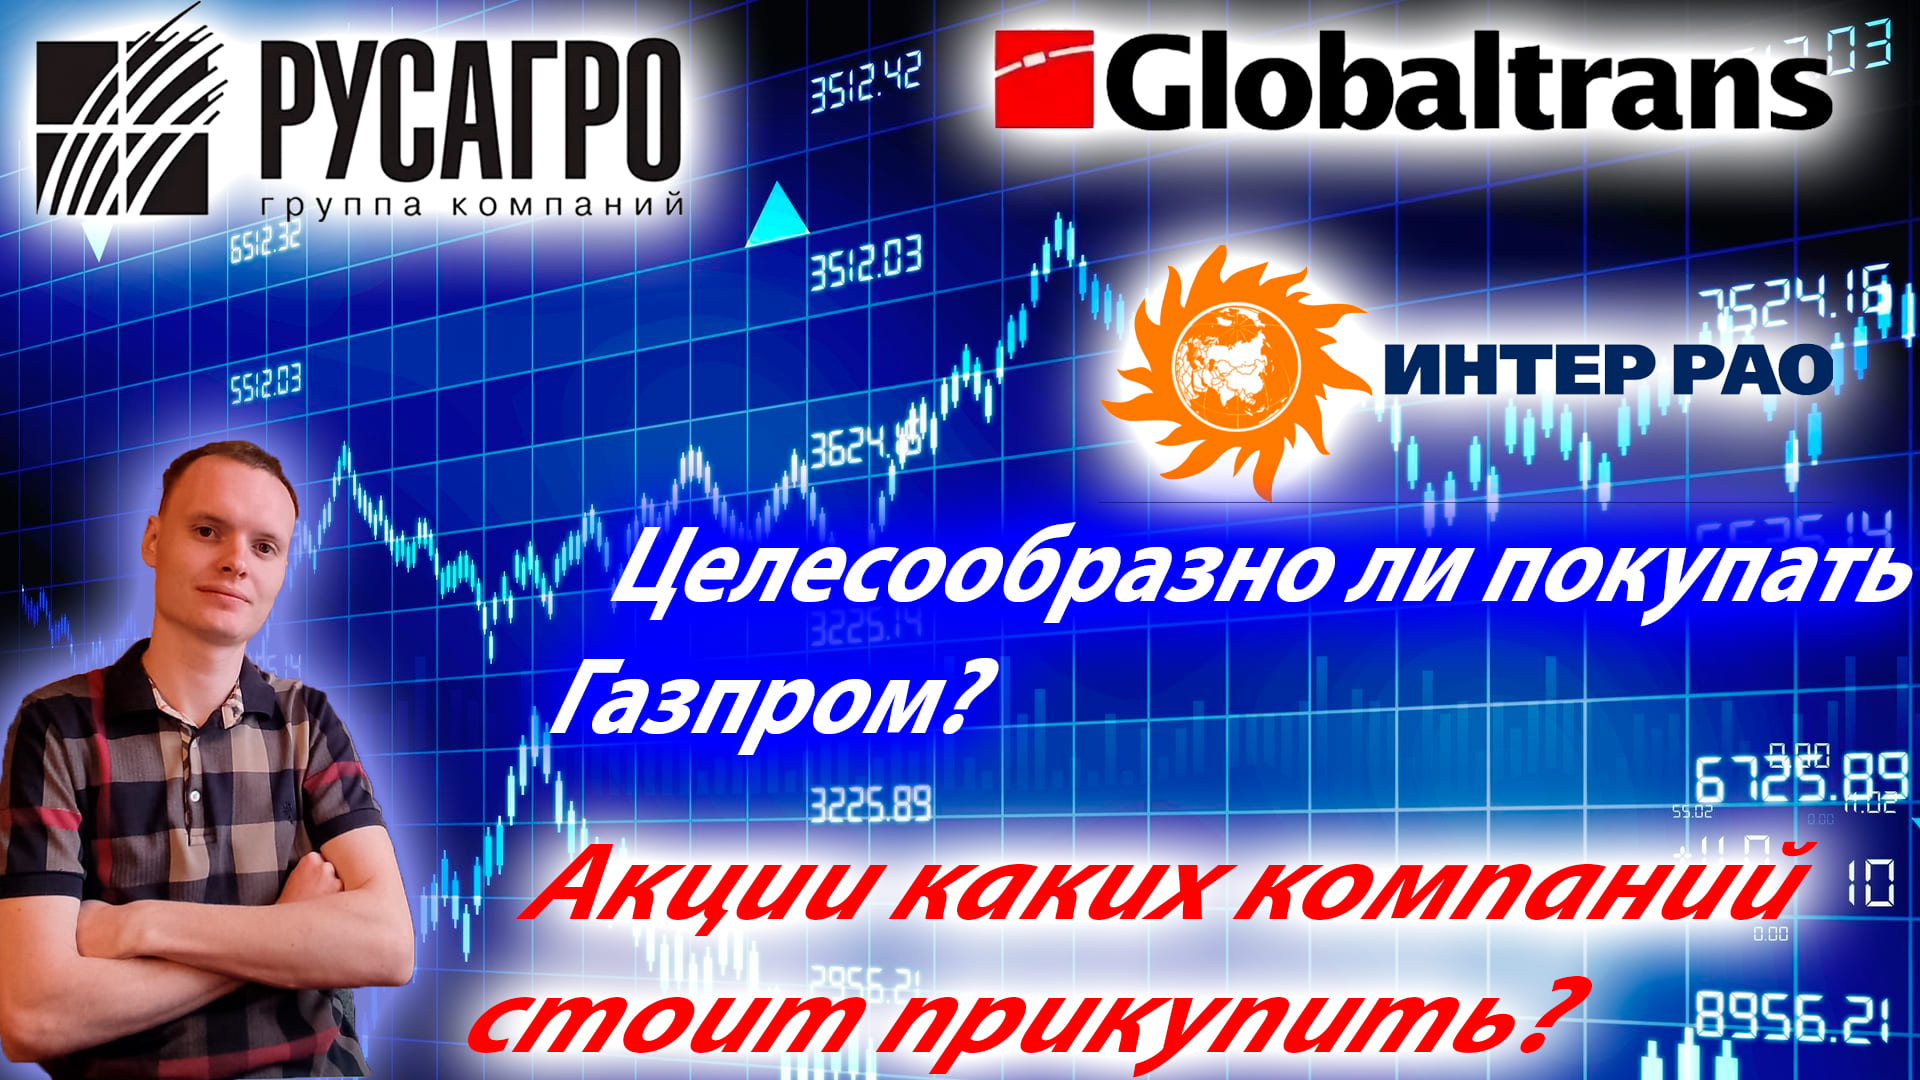 Глобалтранс акции форум. ГЛОБАЛТРАНС акции цена. Акции Газпрома график 2022. Дивиденды Газпрома в 2022. Прогноз по акциям Газпрома.